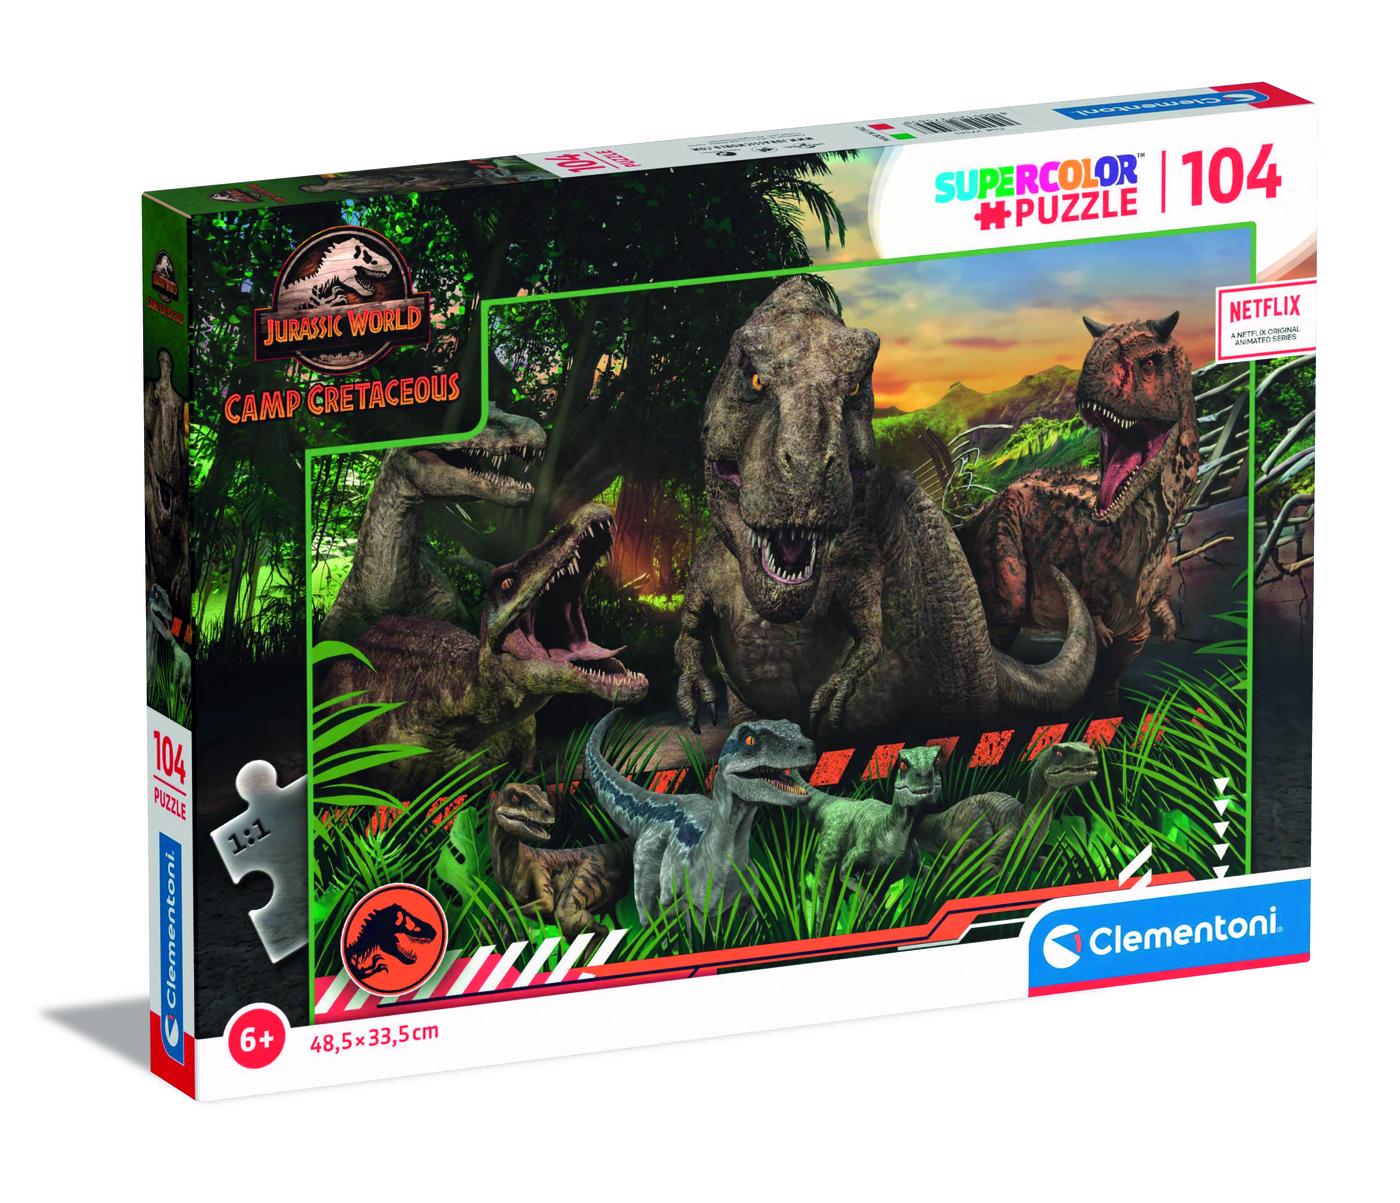 Puzzle Jurassic World 104 pieces